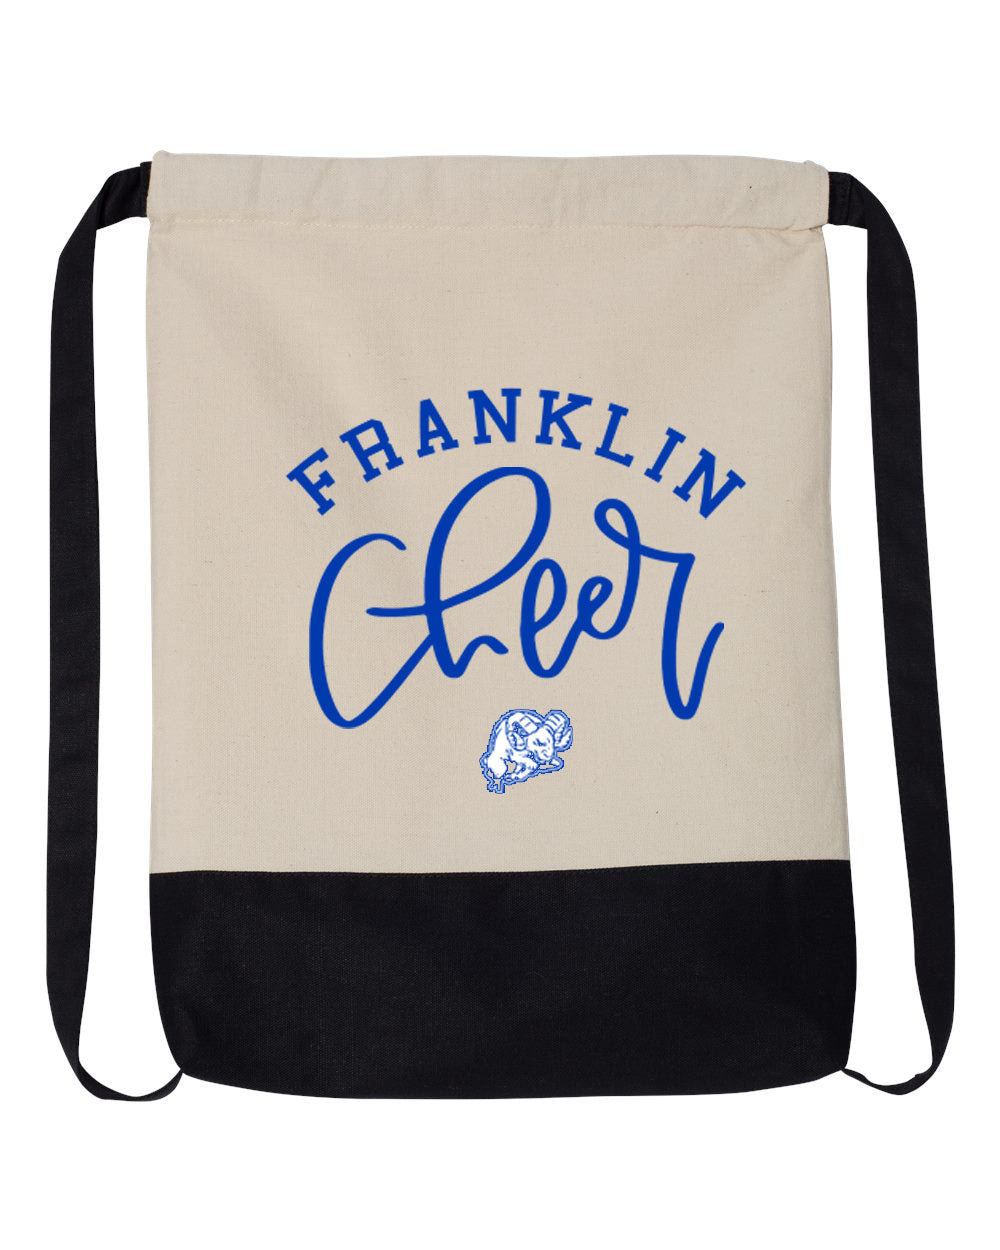 Franklin Cheer Drawstring Bag Design 3